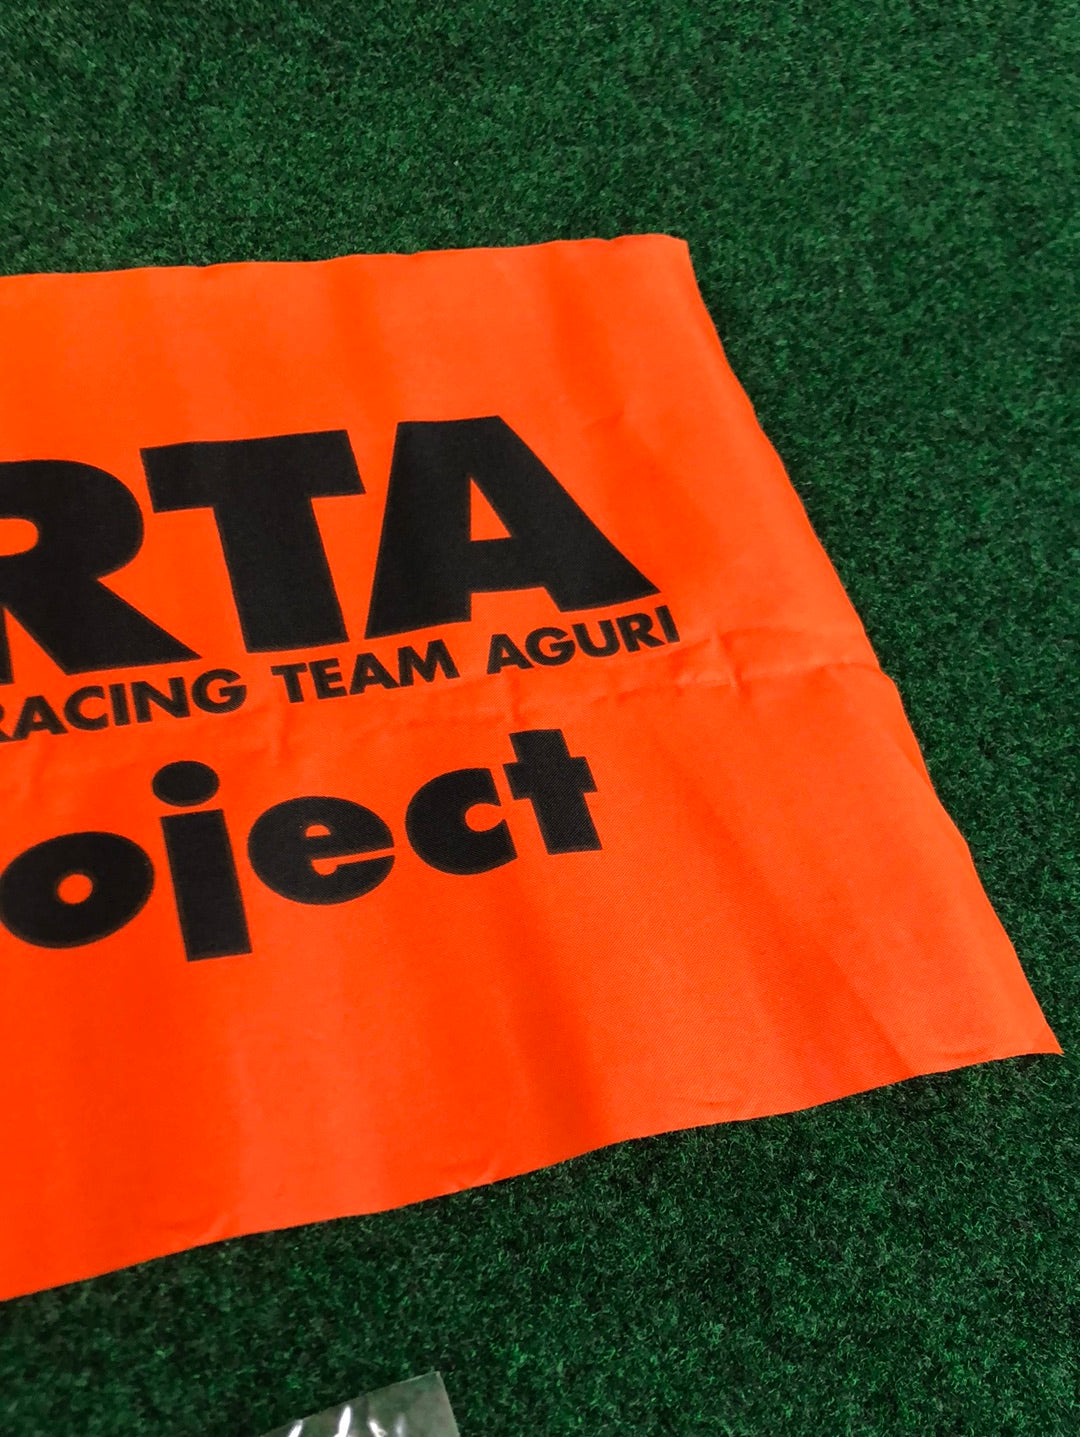 ARTA Project - Autobacs Racing Team Flag & Key Chain Set